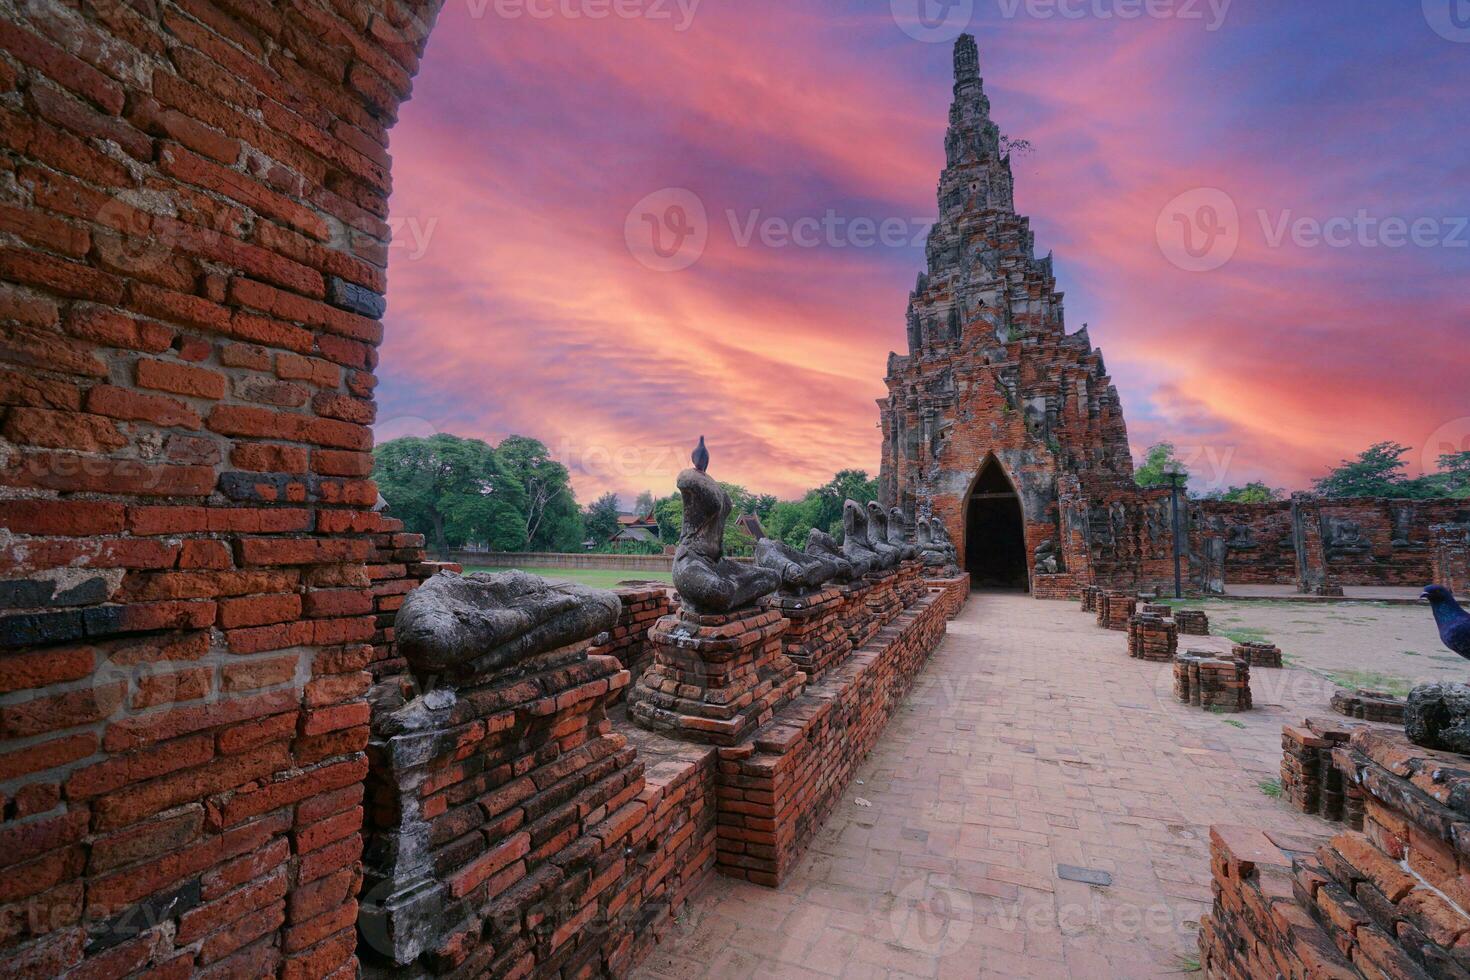 ayutthaya histórico parque, antiguo y hermosa templo en ayutthaya período wat chaiwattanaram, Tailandia foto